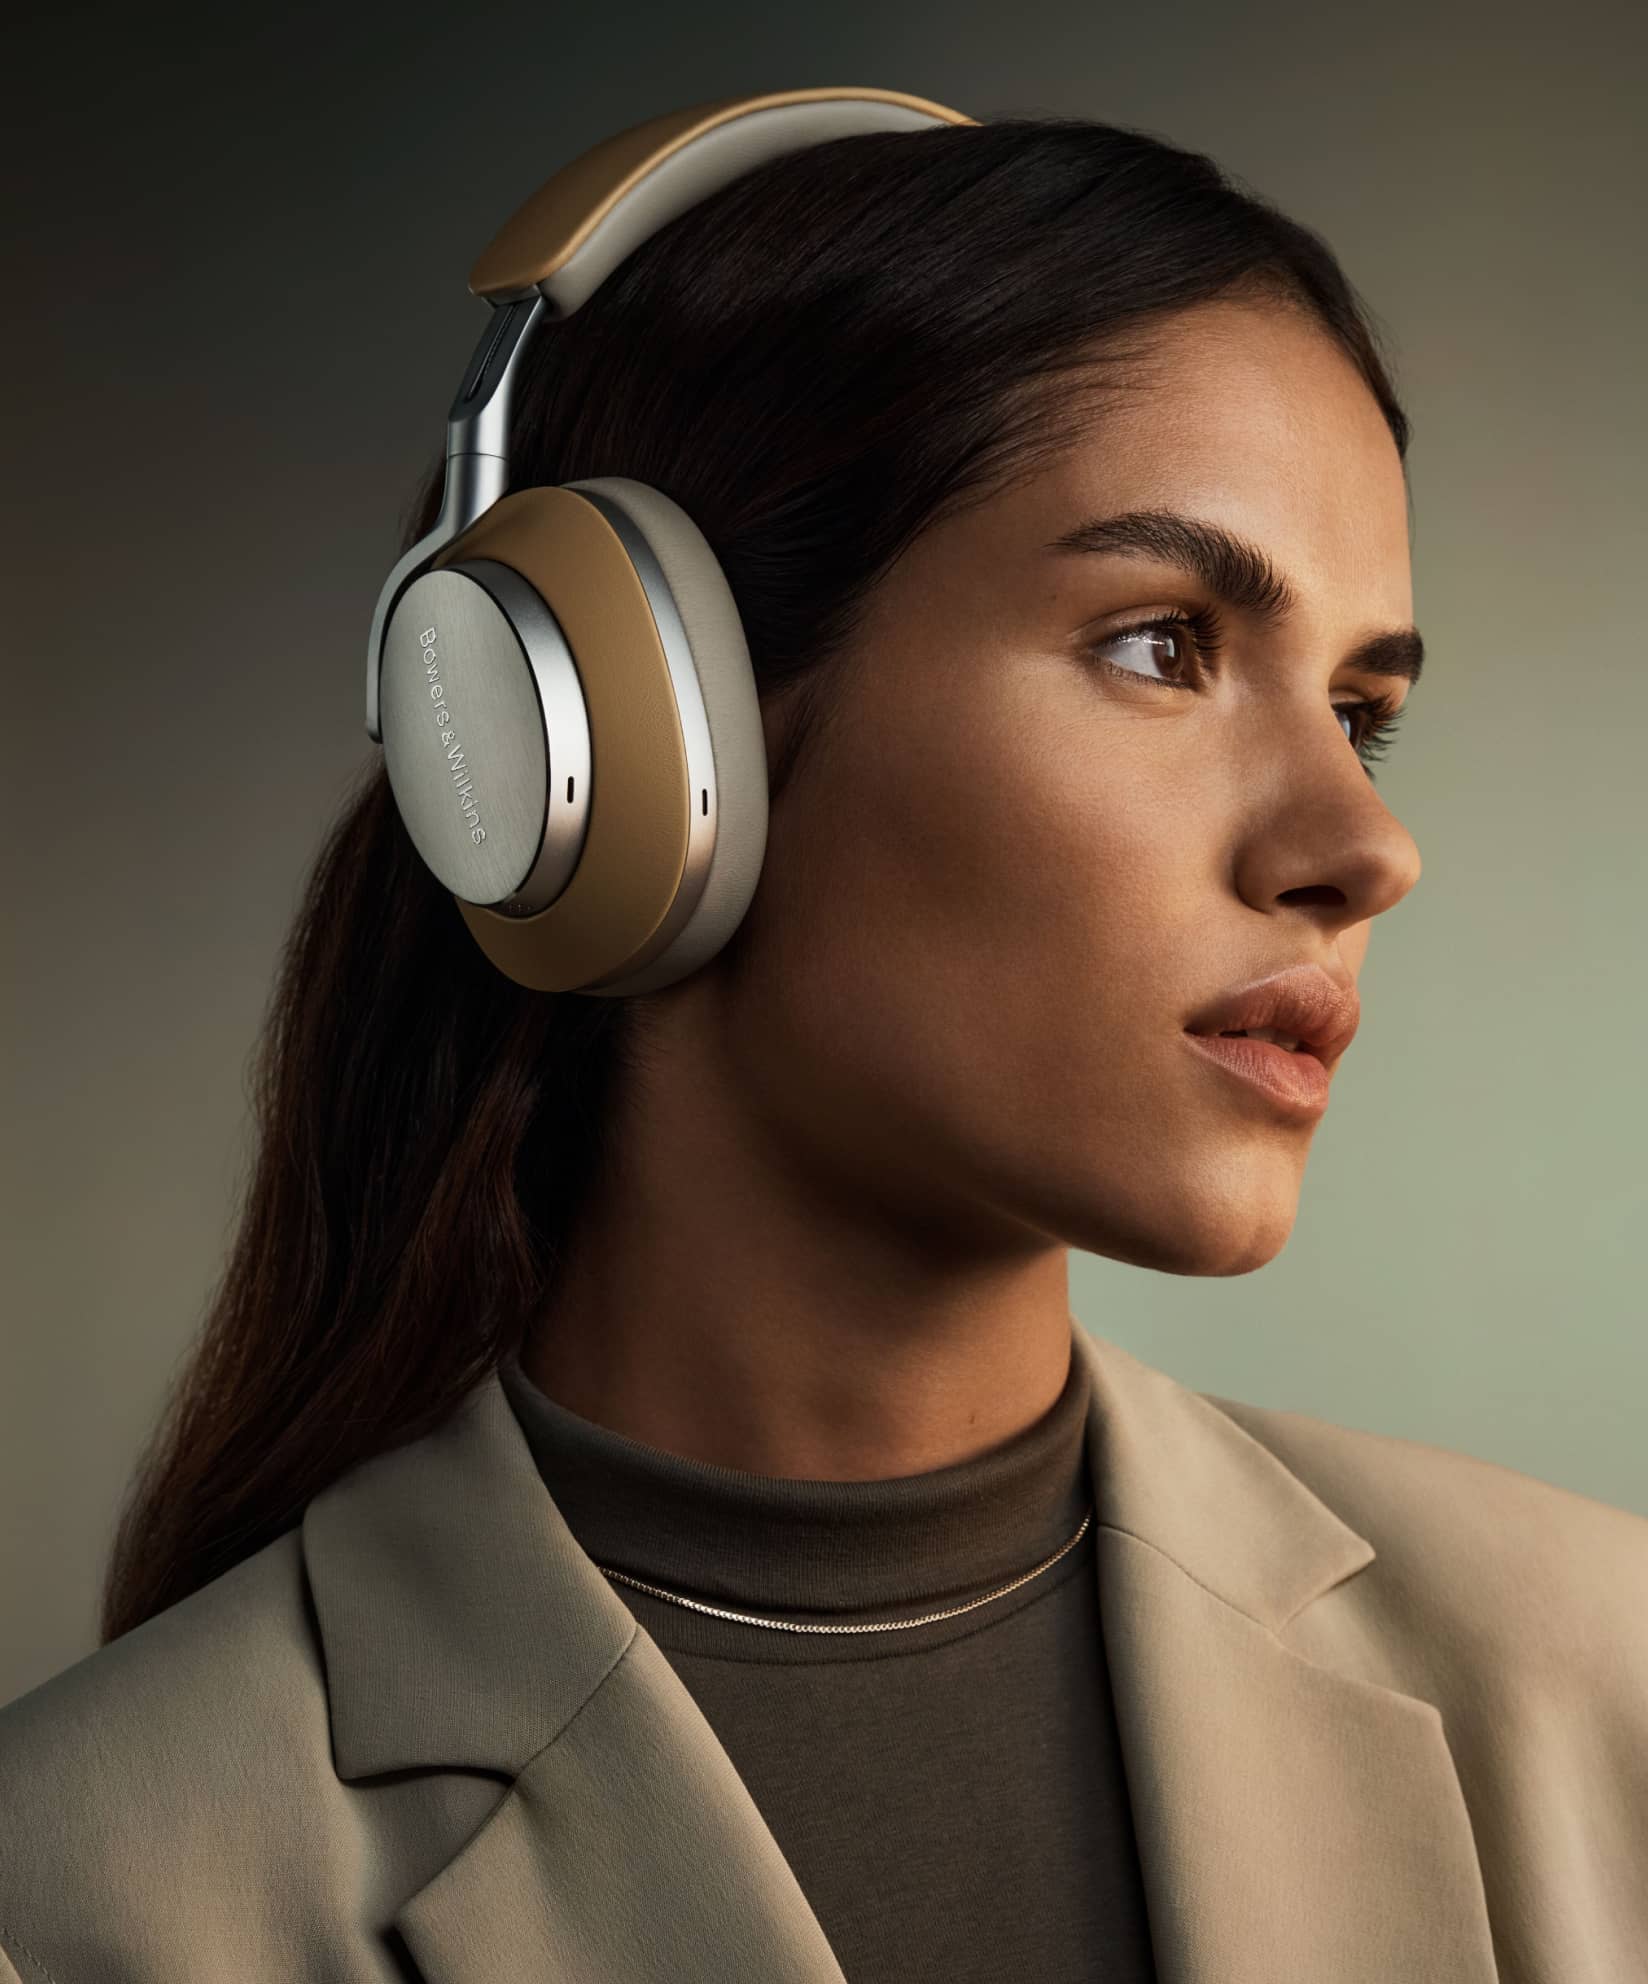 PX8 Wireless Noise Canceling Headphones